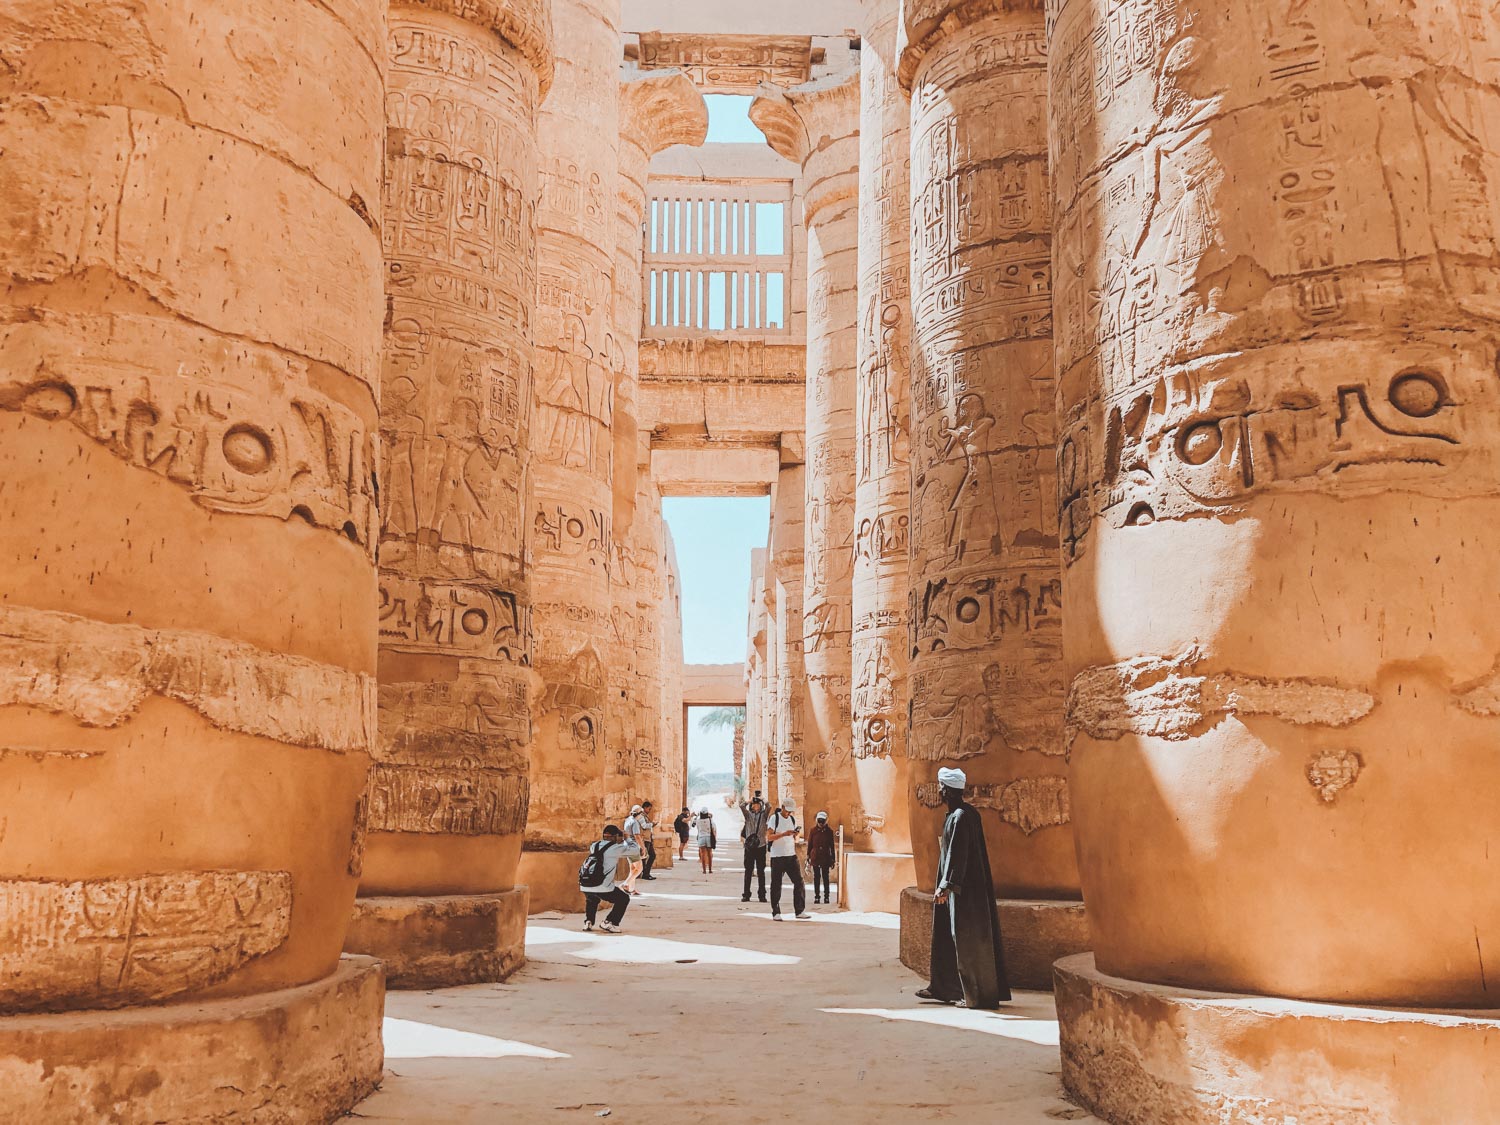 visiting egypt essay